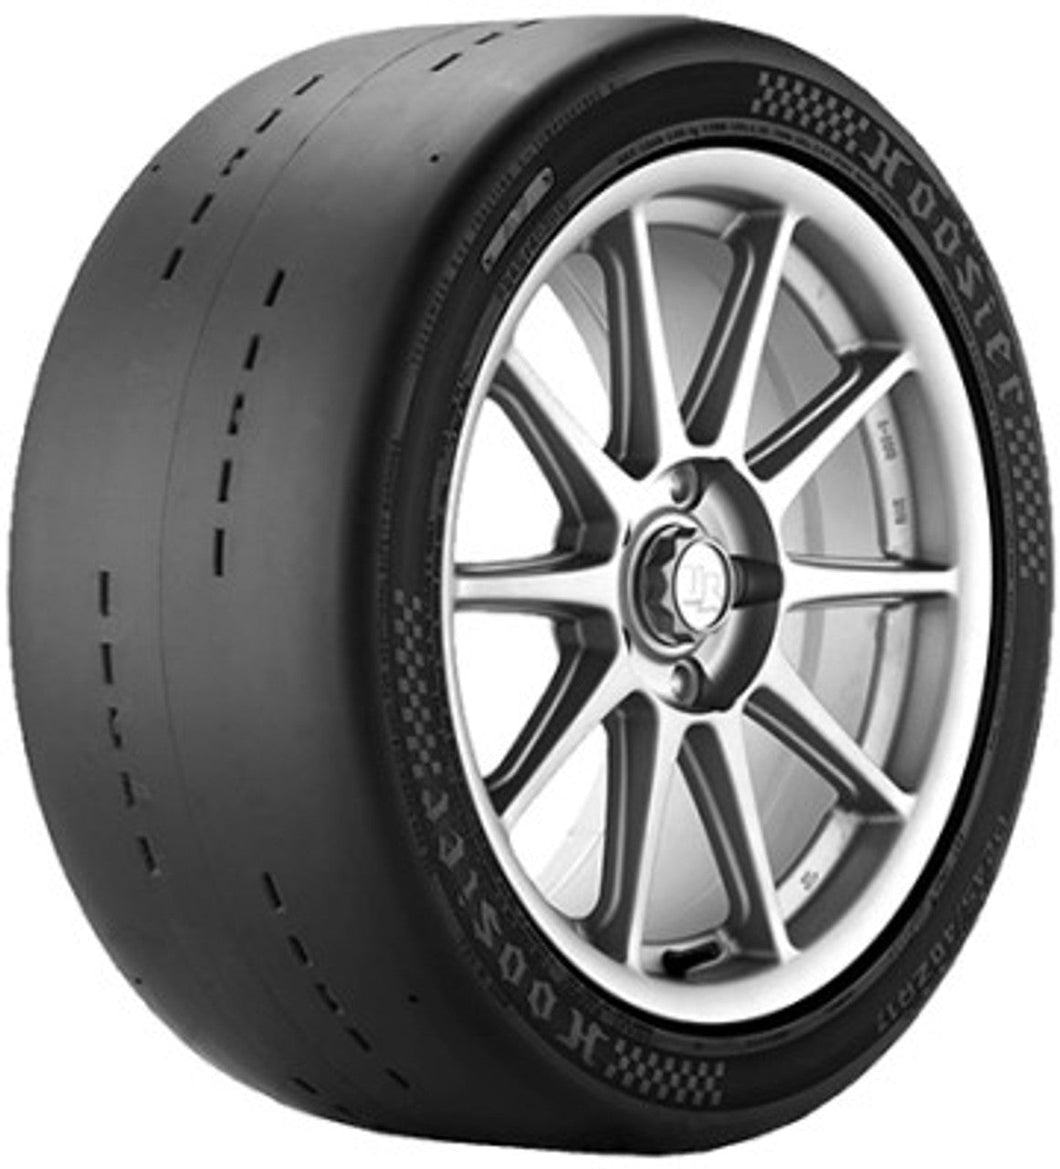 275/35 ZR17 Hoosier Tire Slick D.O.T Neumático